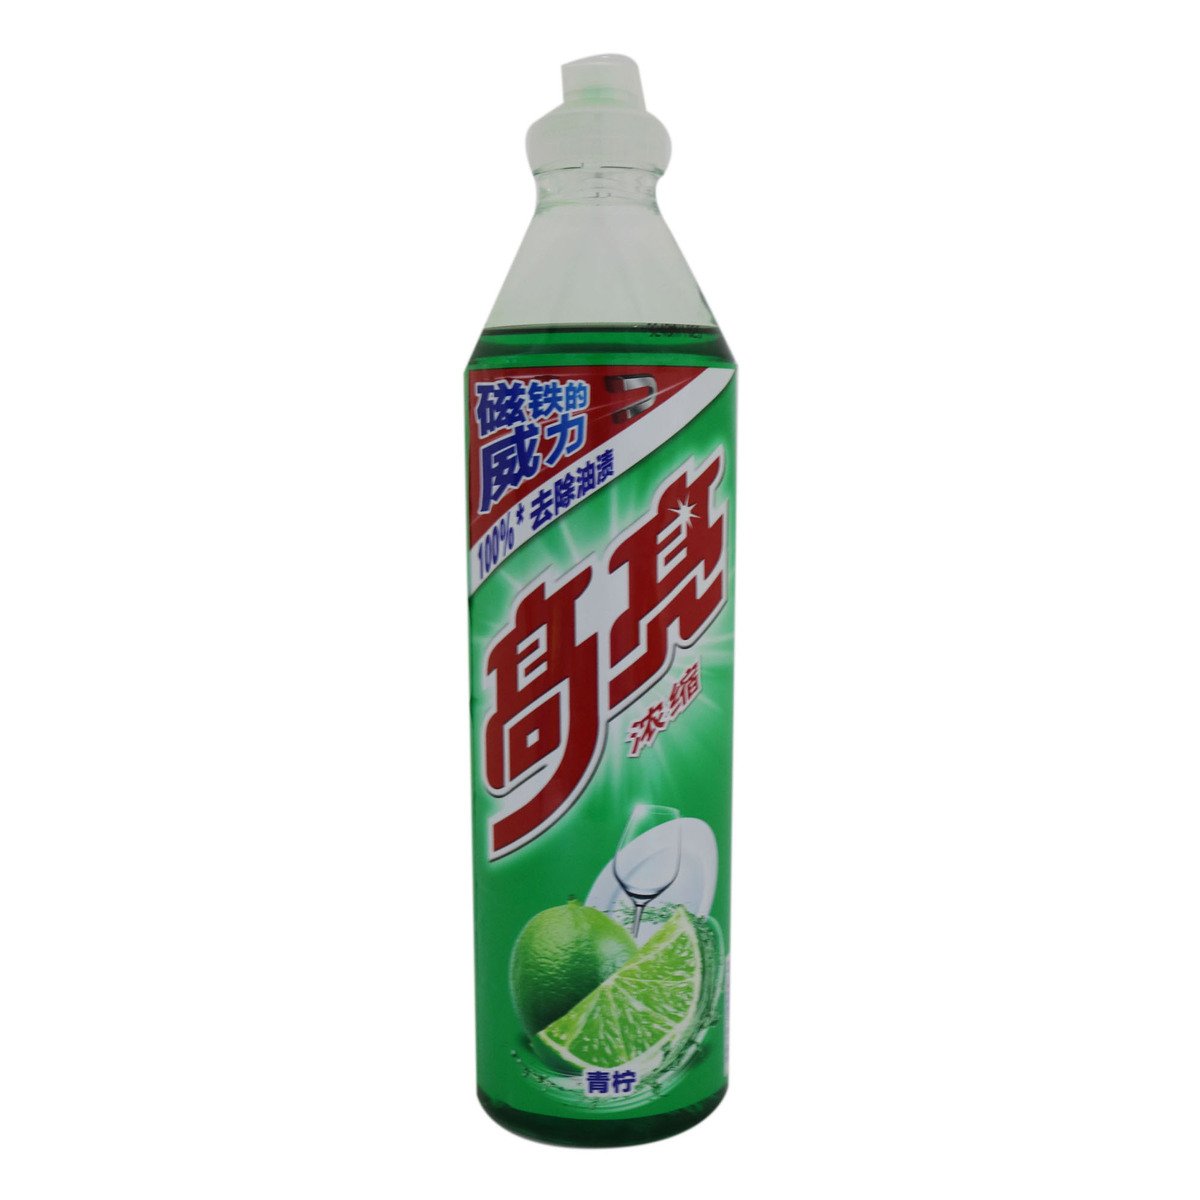 Glo Dishwash Lime 450ml